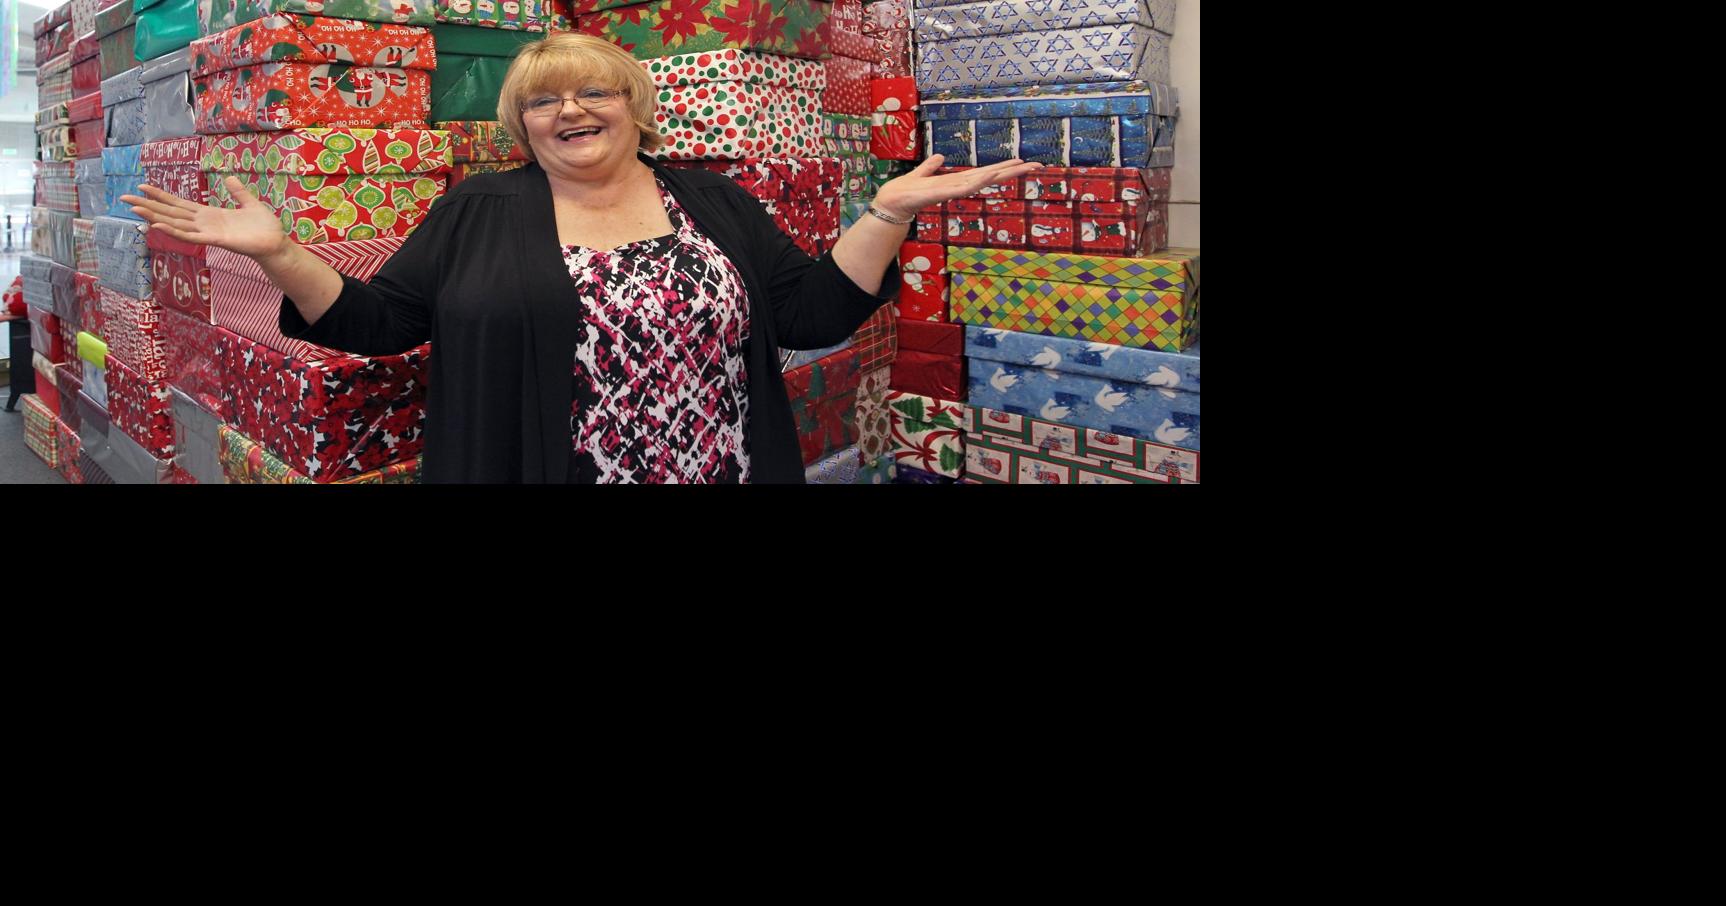 Sandy's seniors: BPD community relations specialist plays Santa | News ...